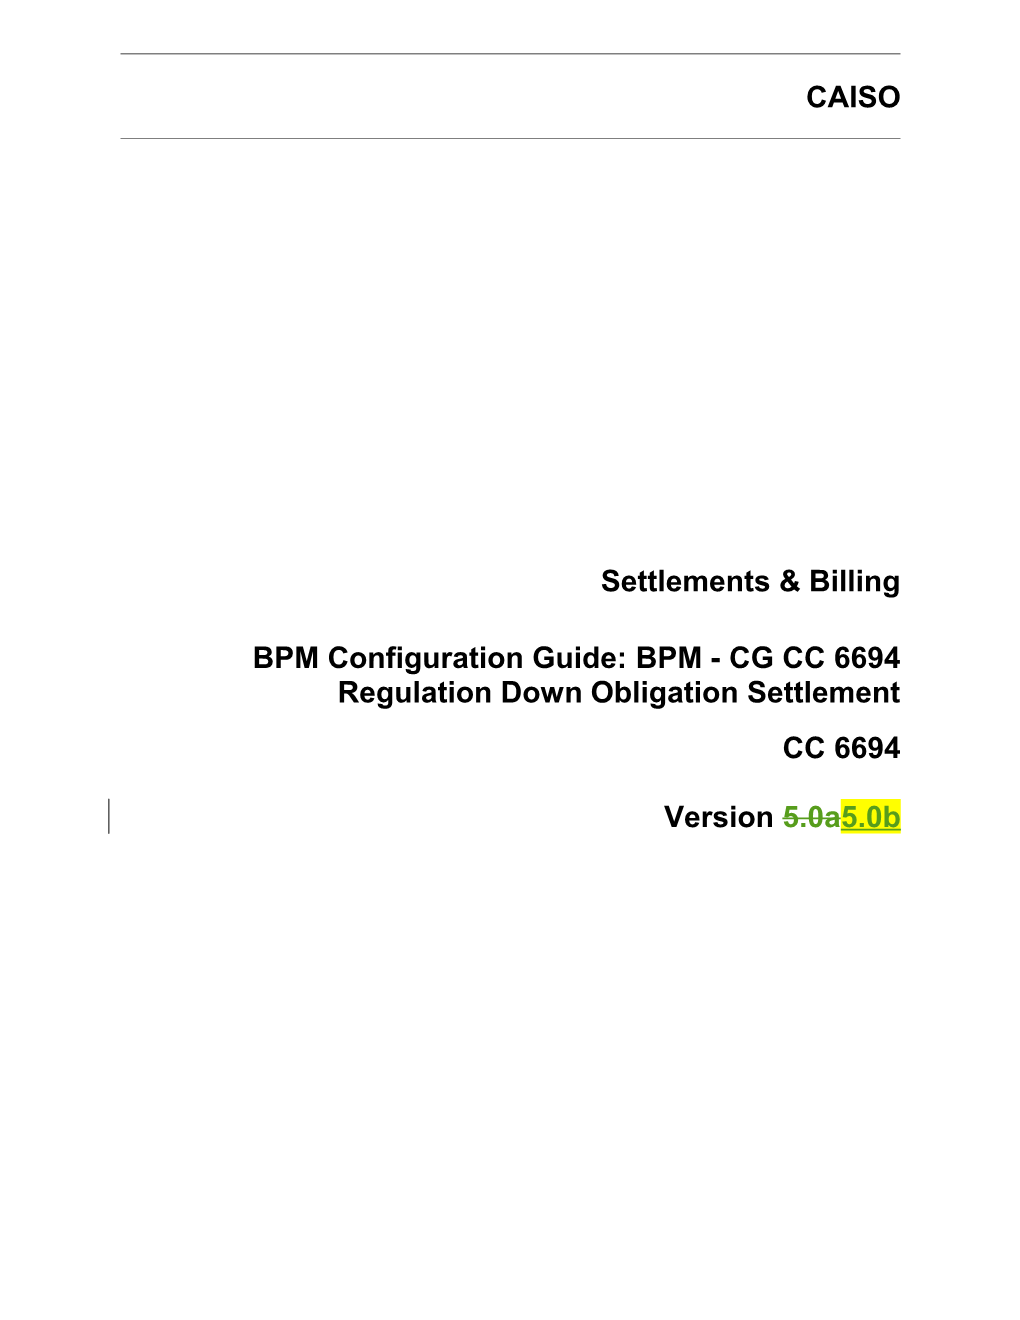 BPM - CG CC 6694 Regulation Down Obligation Settlement